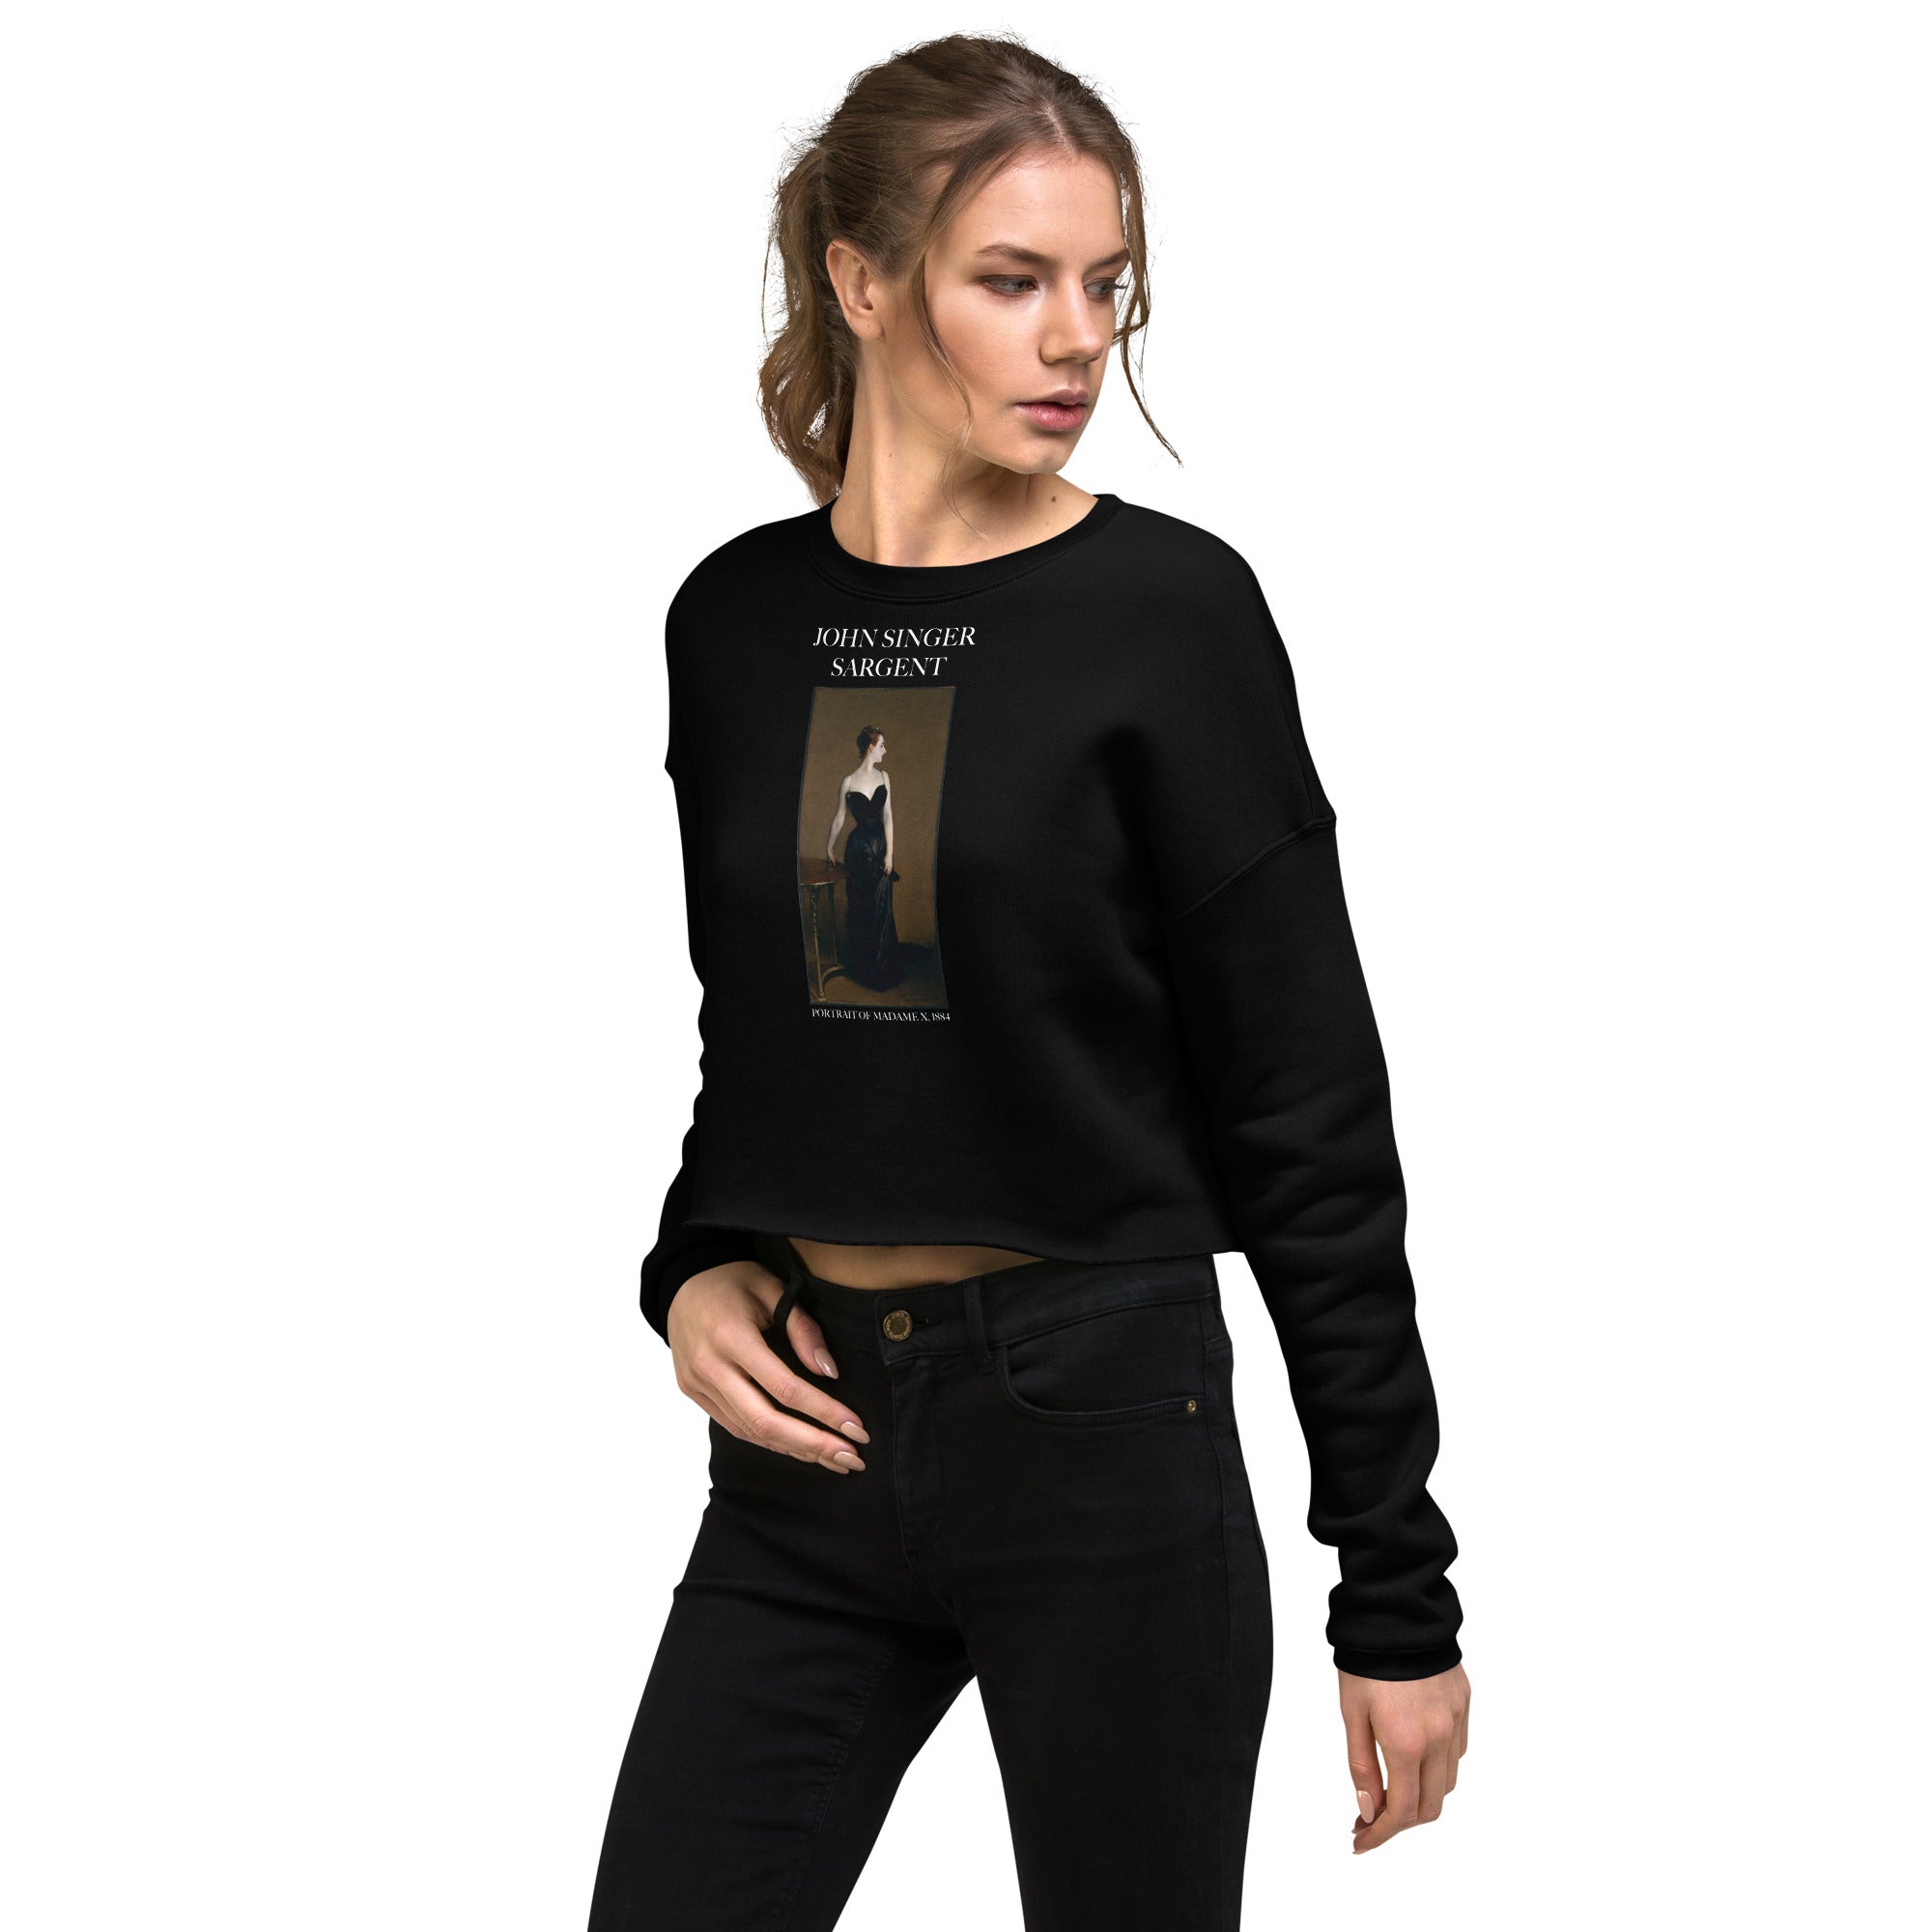 John Singer Sargent 'Portrait of Madame X' Famous Painting Cropped Sweatshirt | Premium Art Cropped Sweatshirt